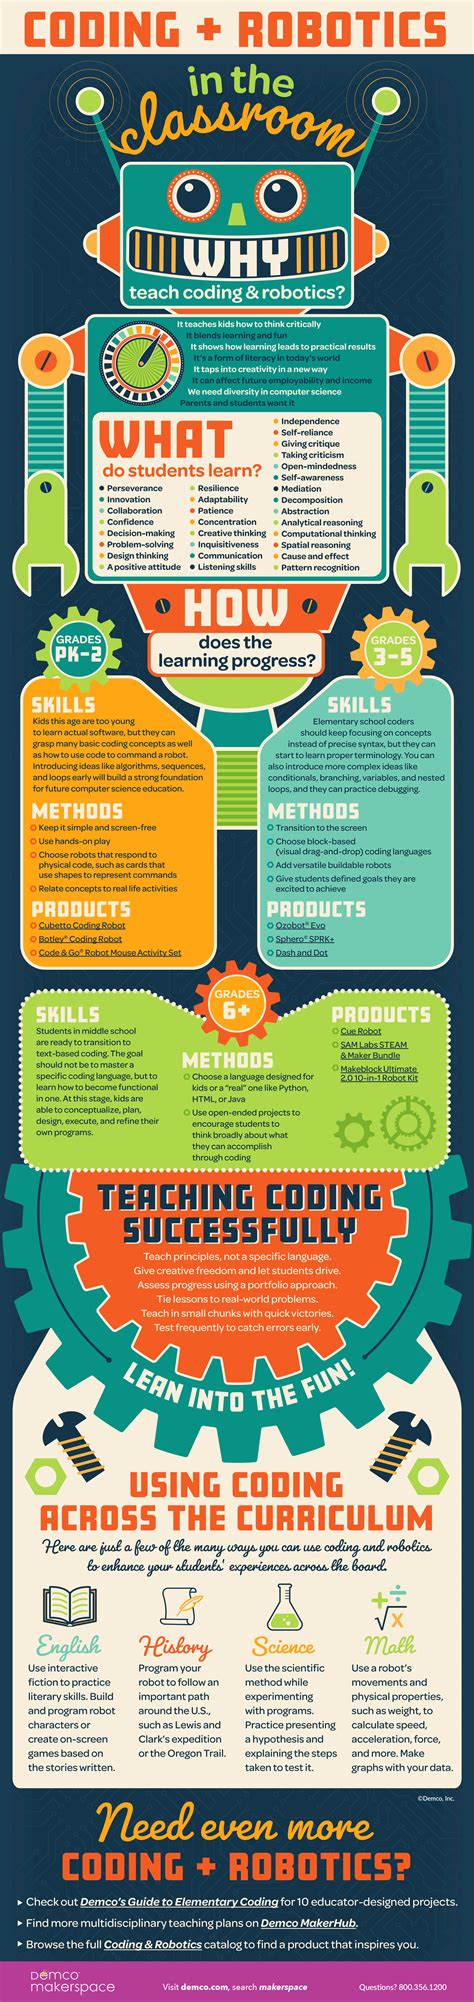 Coding and Robotics Infographic | Teaching coding, Coding, Robot